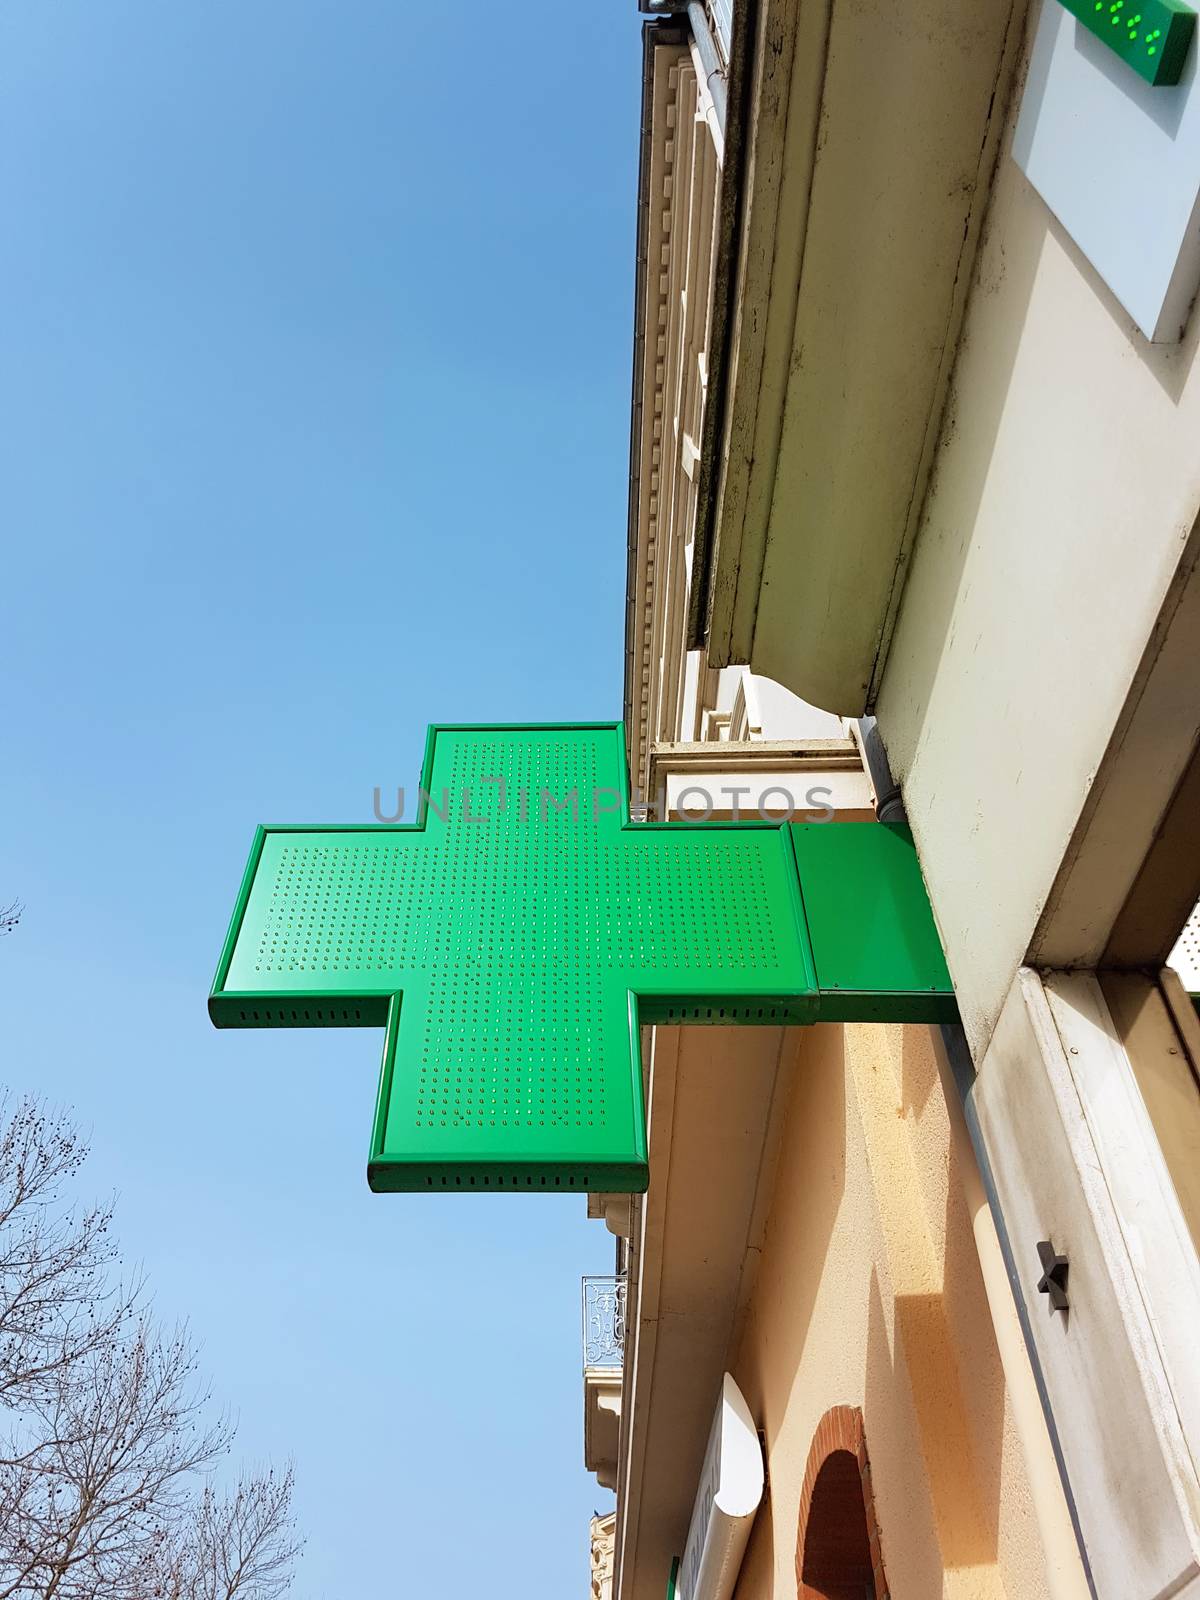 French Pharmacy Sign by bensib